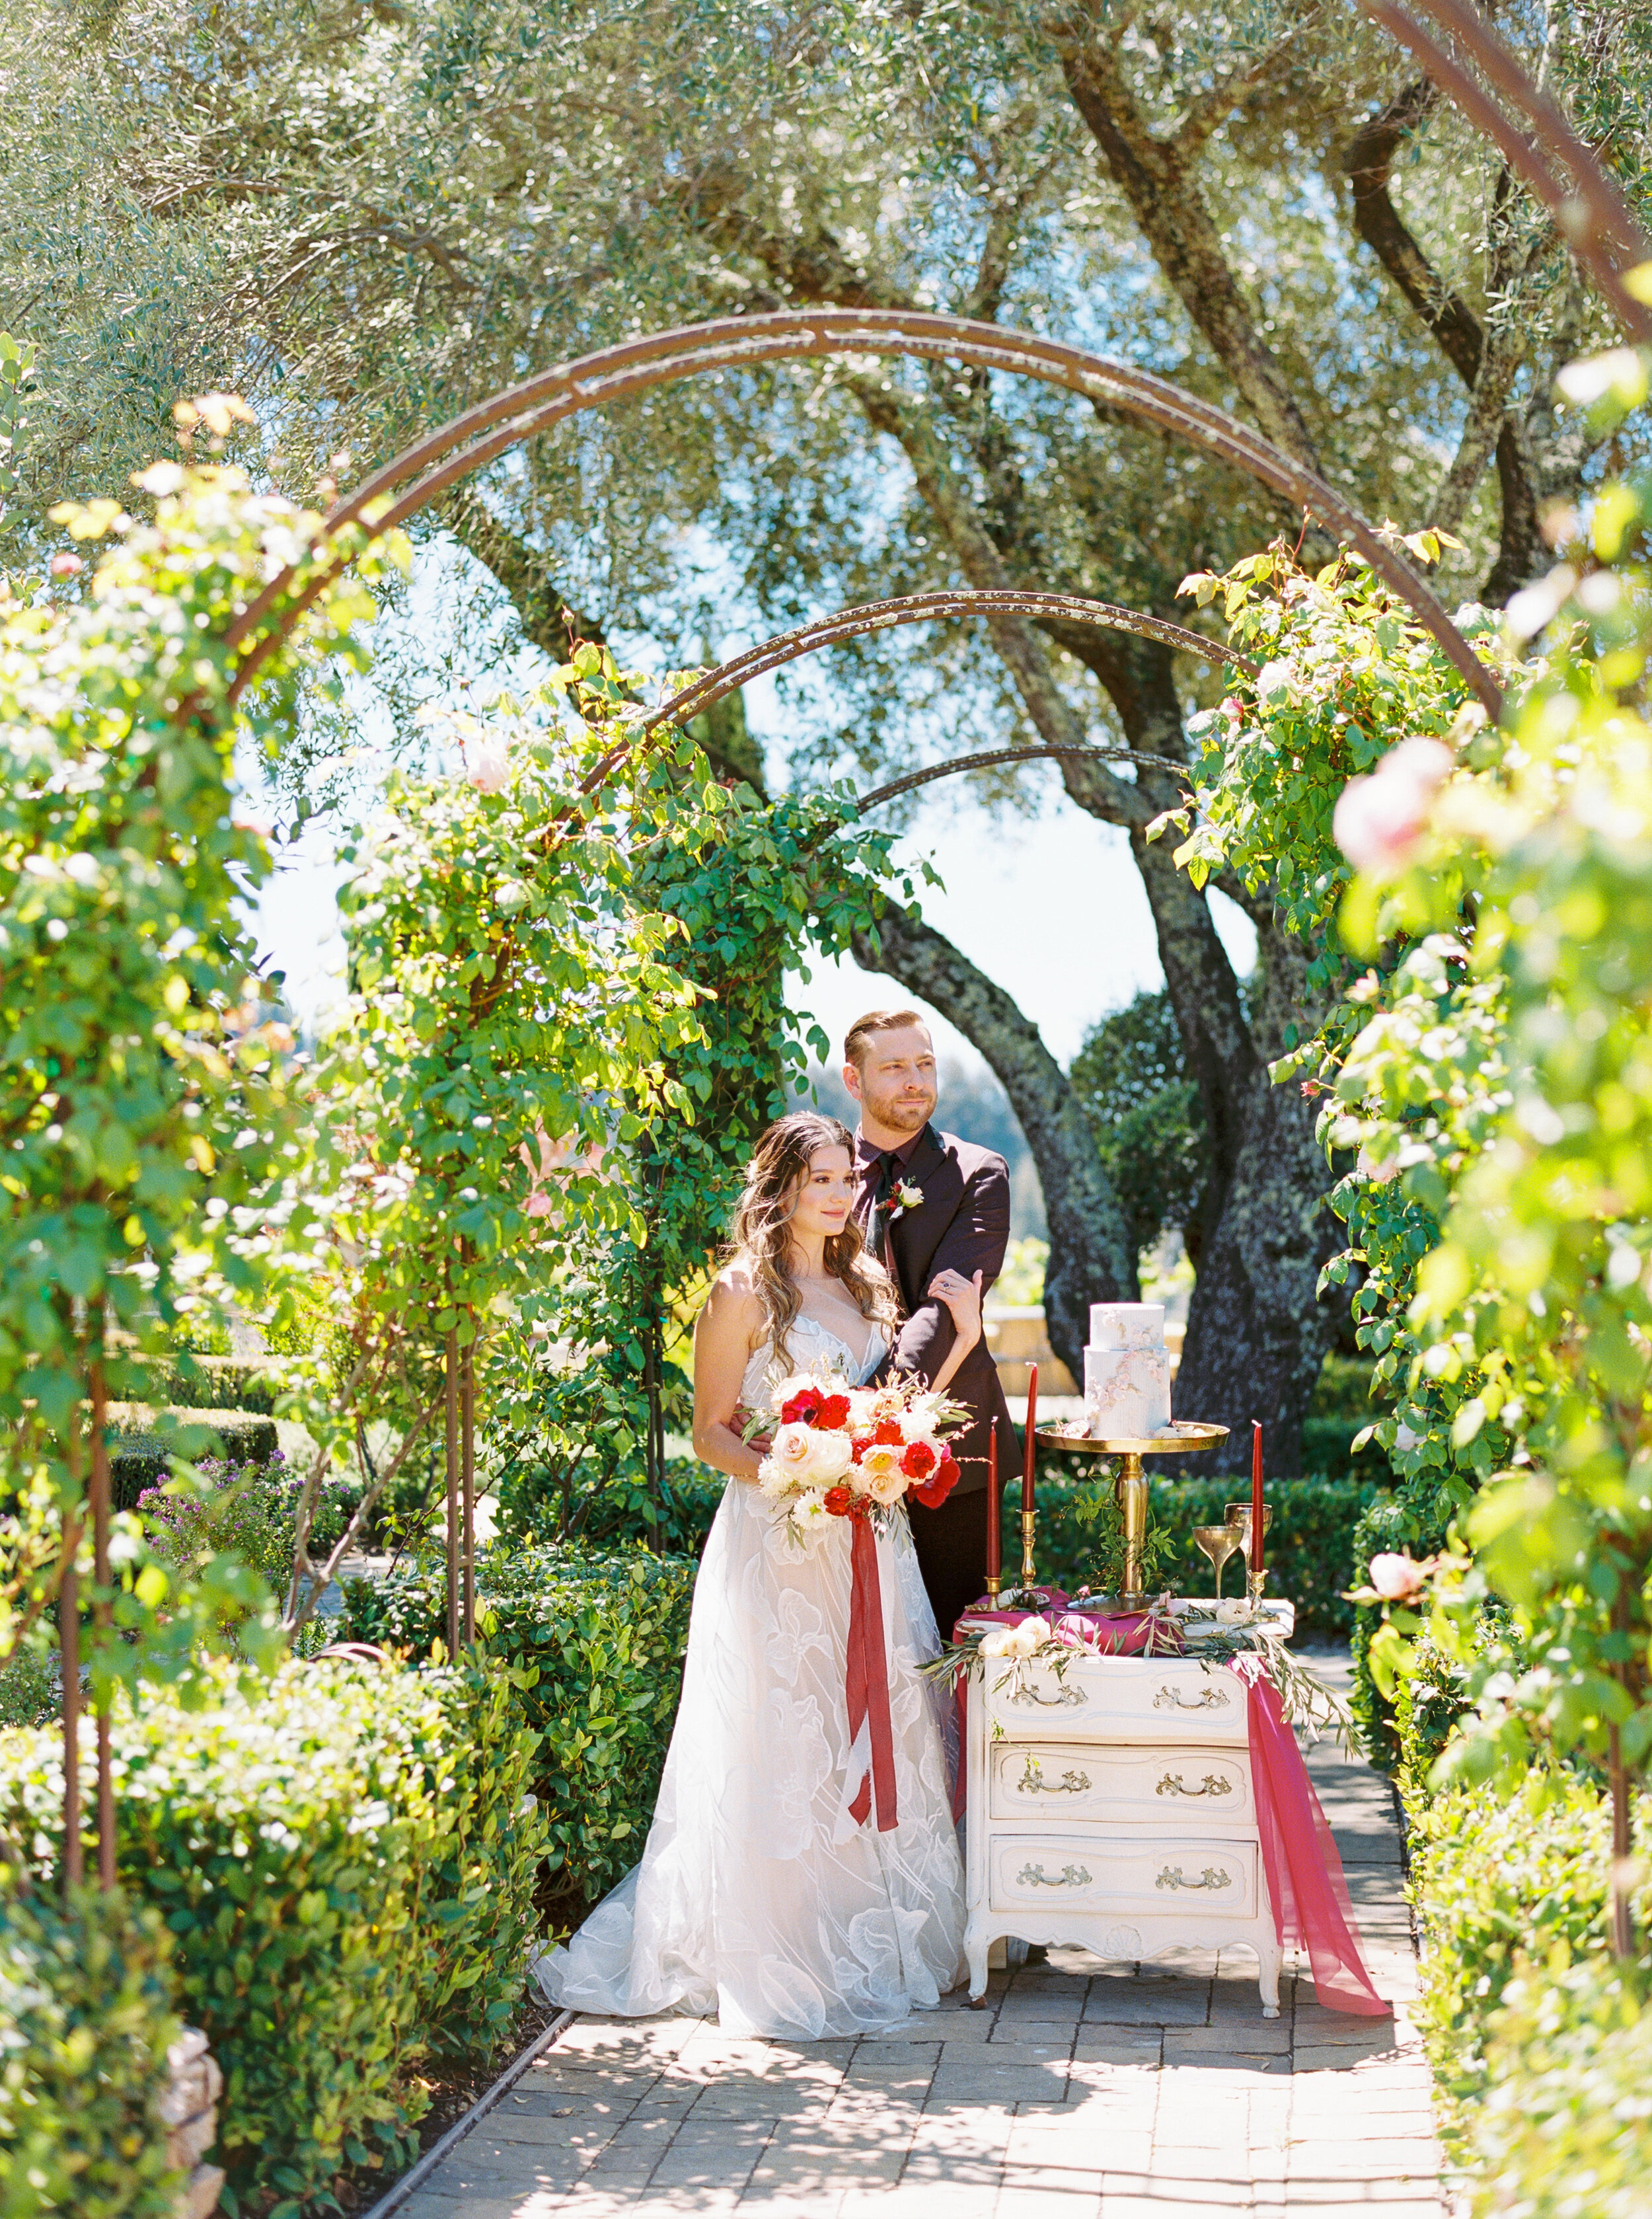 Regale Winery and Vineyards Wedding - Sarahi Hadden Photography-473.jpg